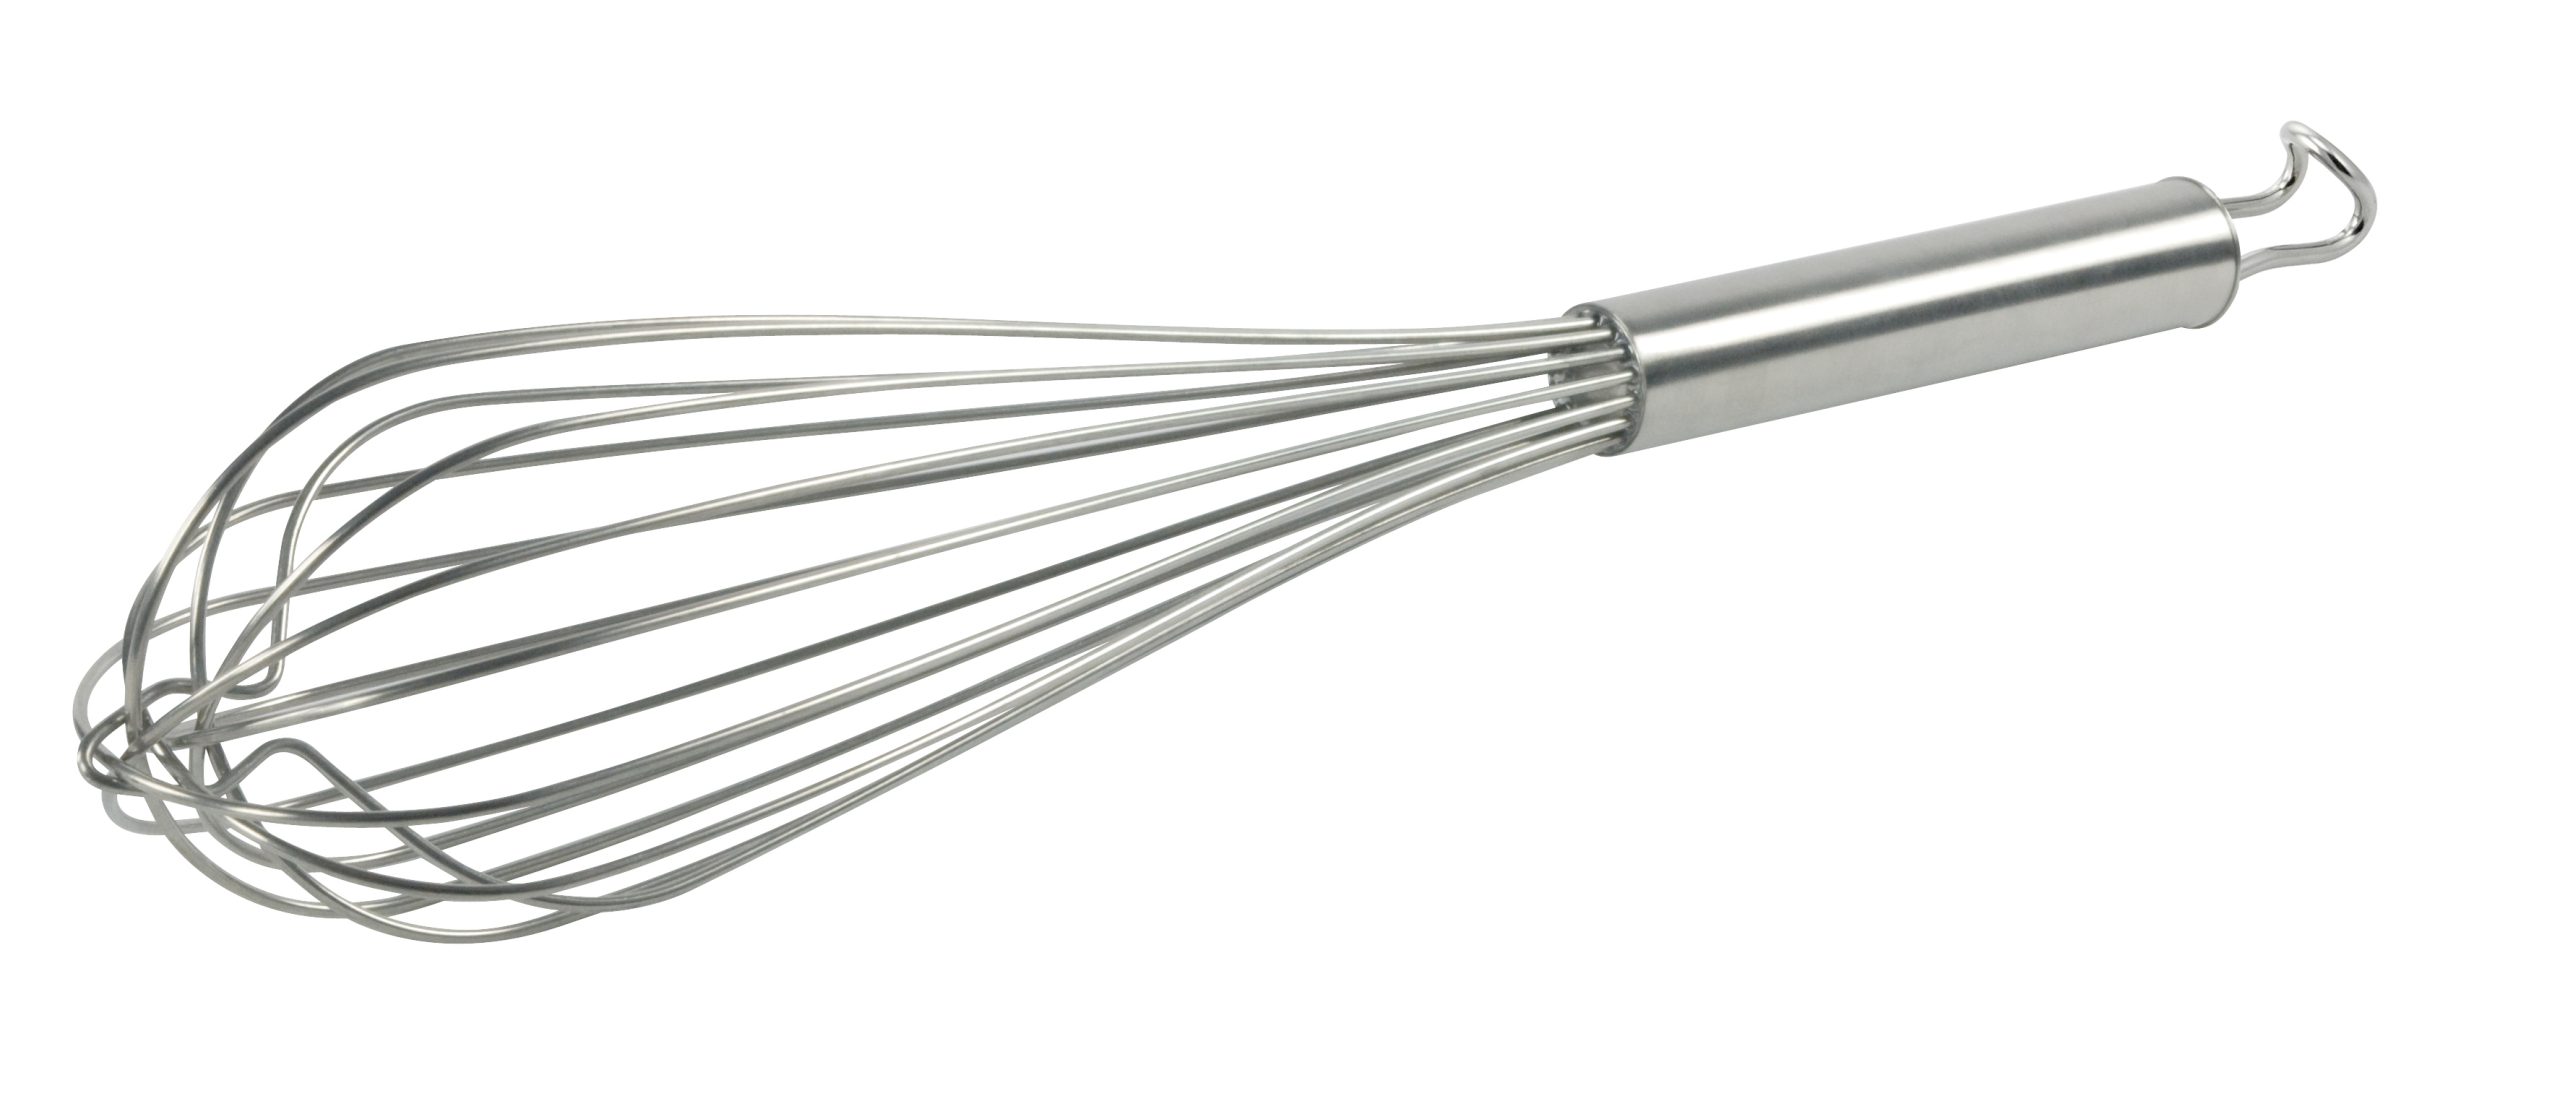 Professional Kitchen whisk 8 wires / 50CM - Stainless steel 18/10 ILSA